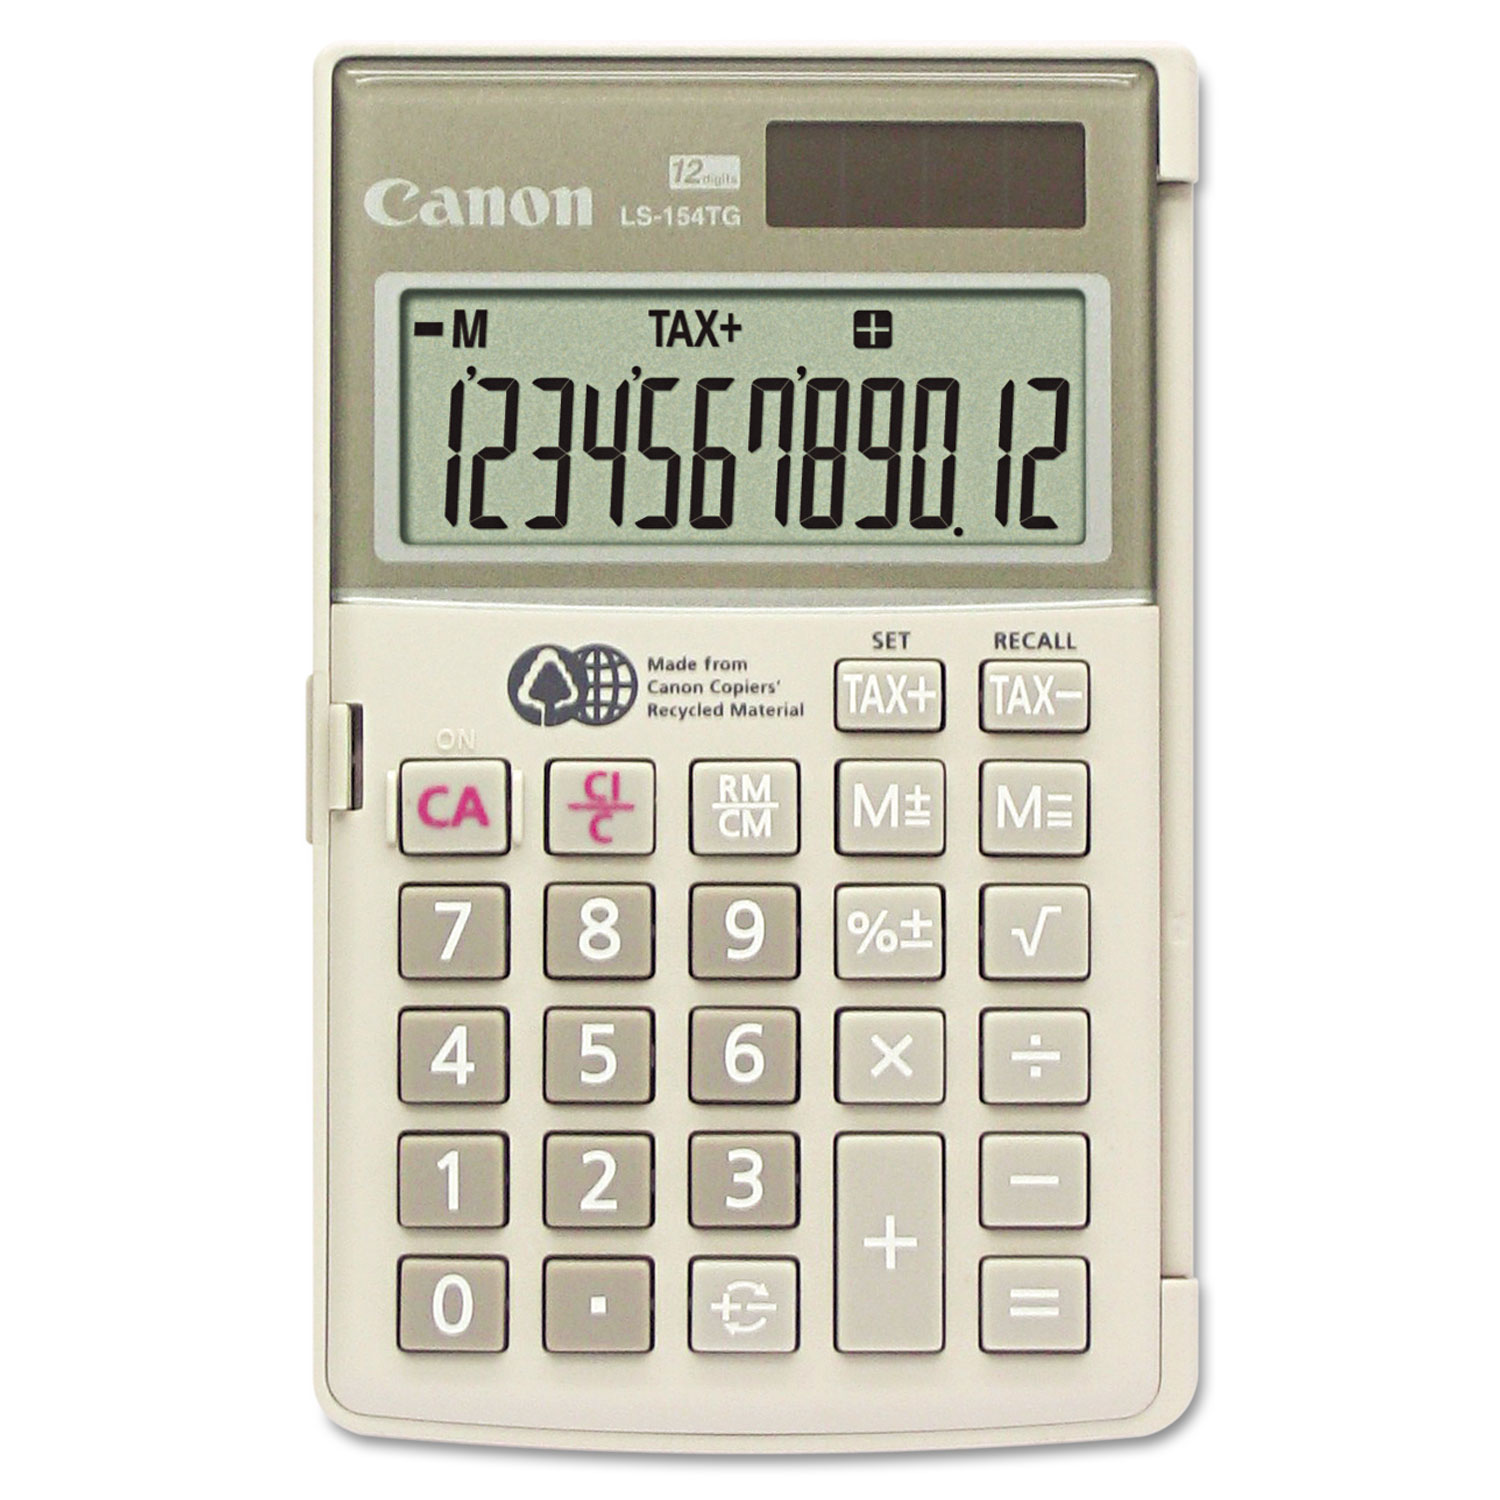  Canon 1075B004 LS154TG Handheld Calculator, 12-Digit LCD (CNM1075B004) 